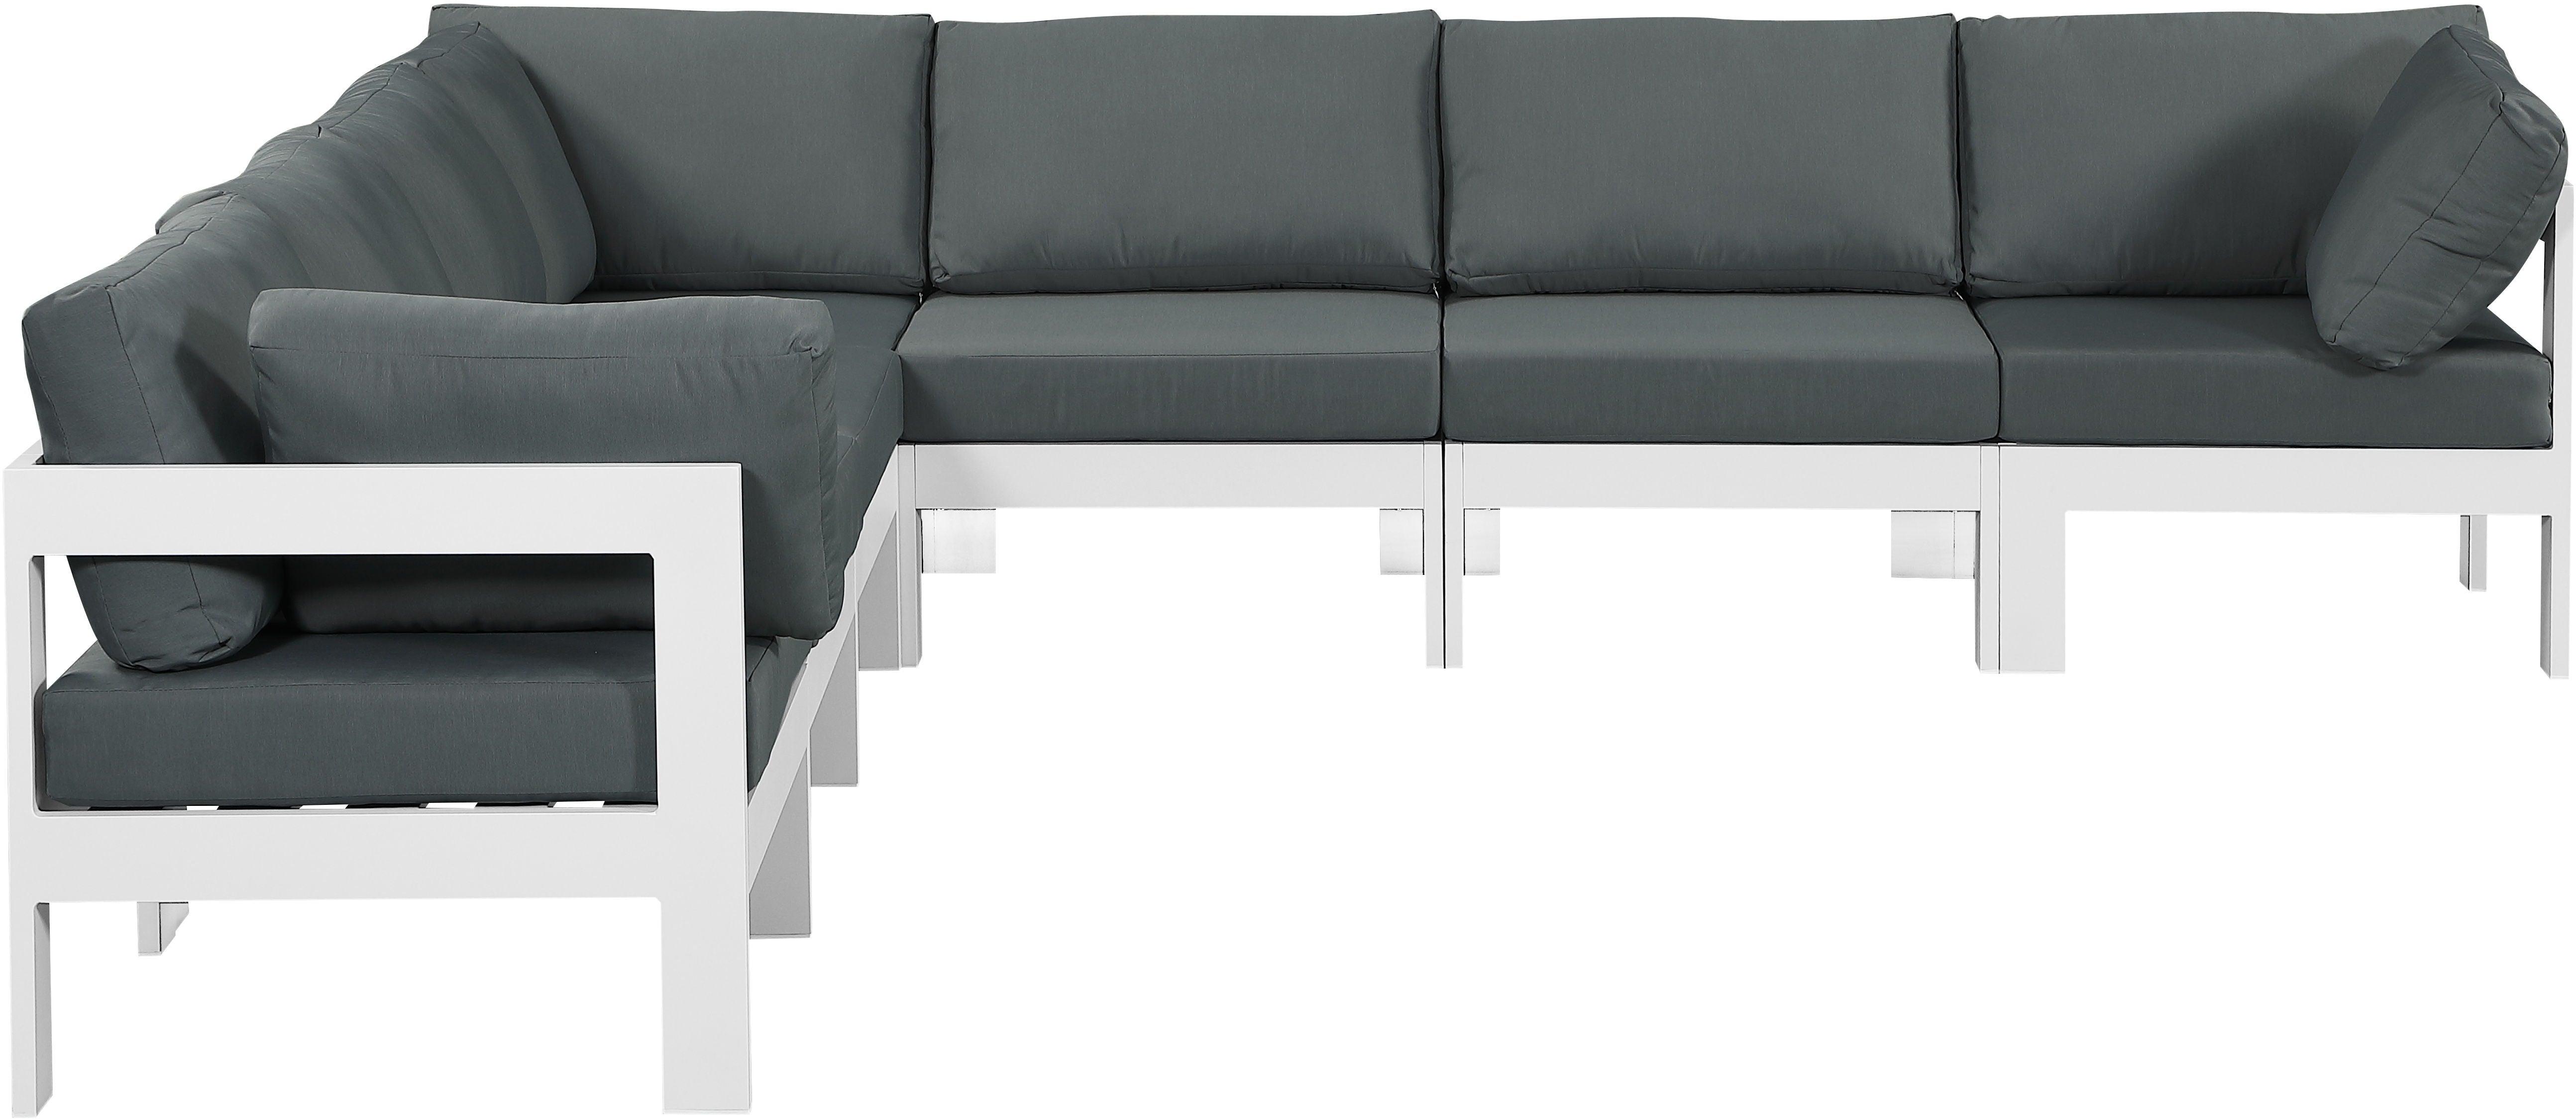 Meridian Furniture - Nizuc - Outdoor Patio Modular Sectional 7 Piece - Grey - Modern & Contemporary - 5th Avenue Furniture